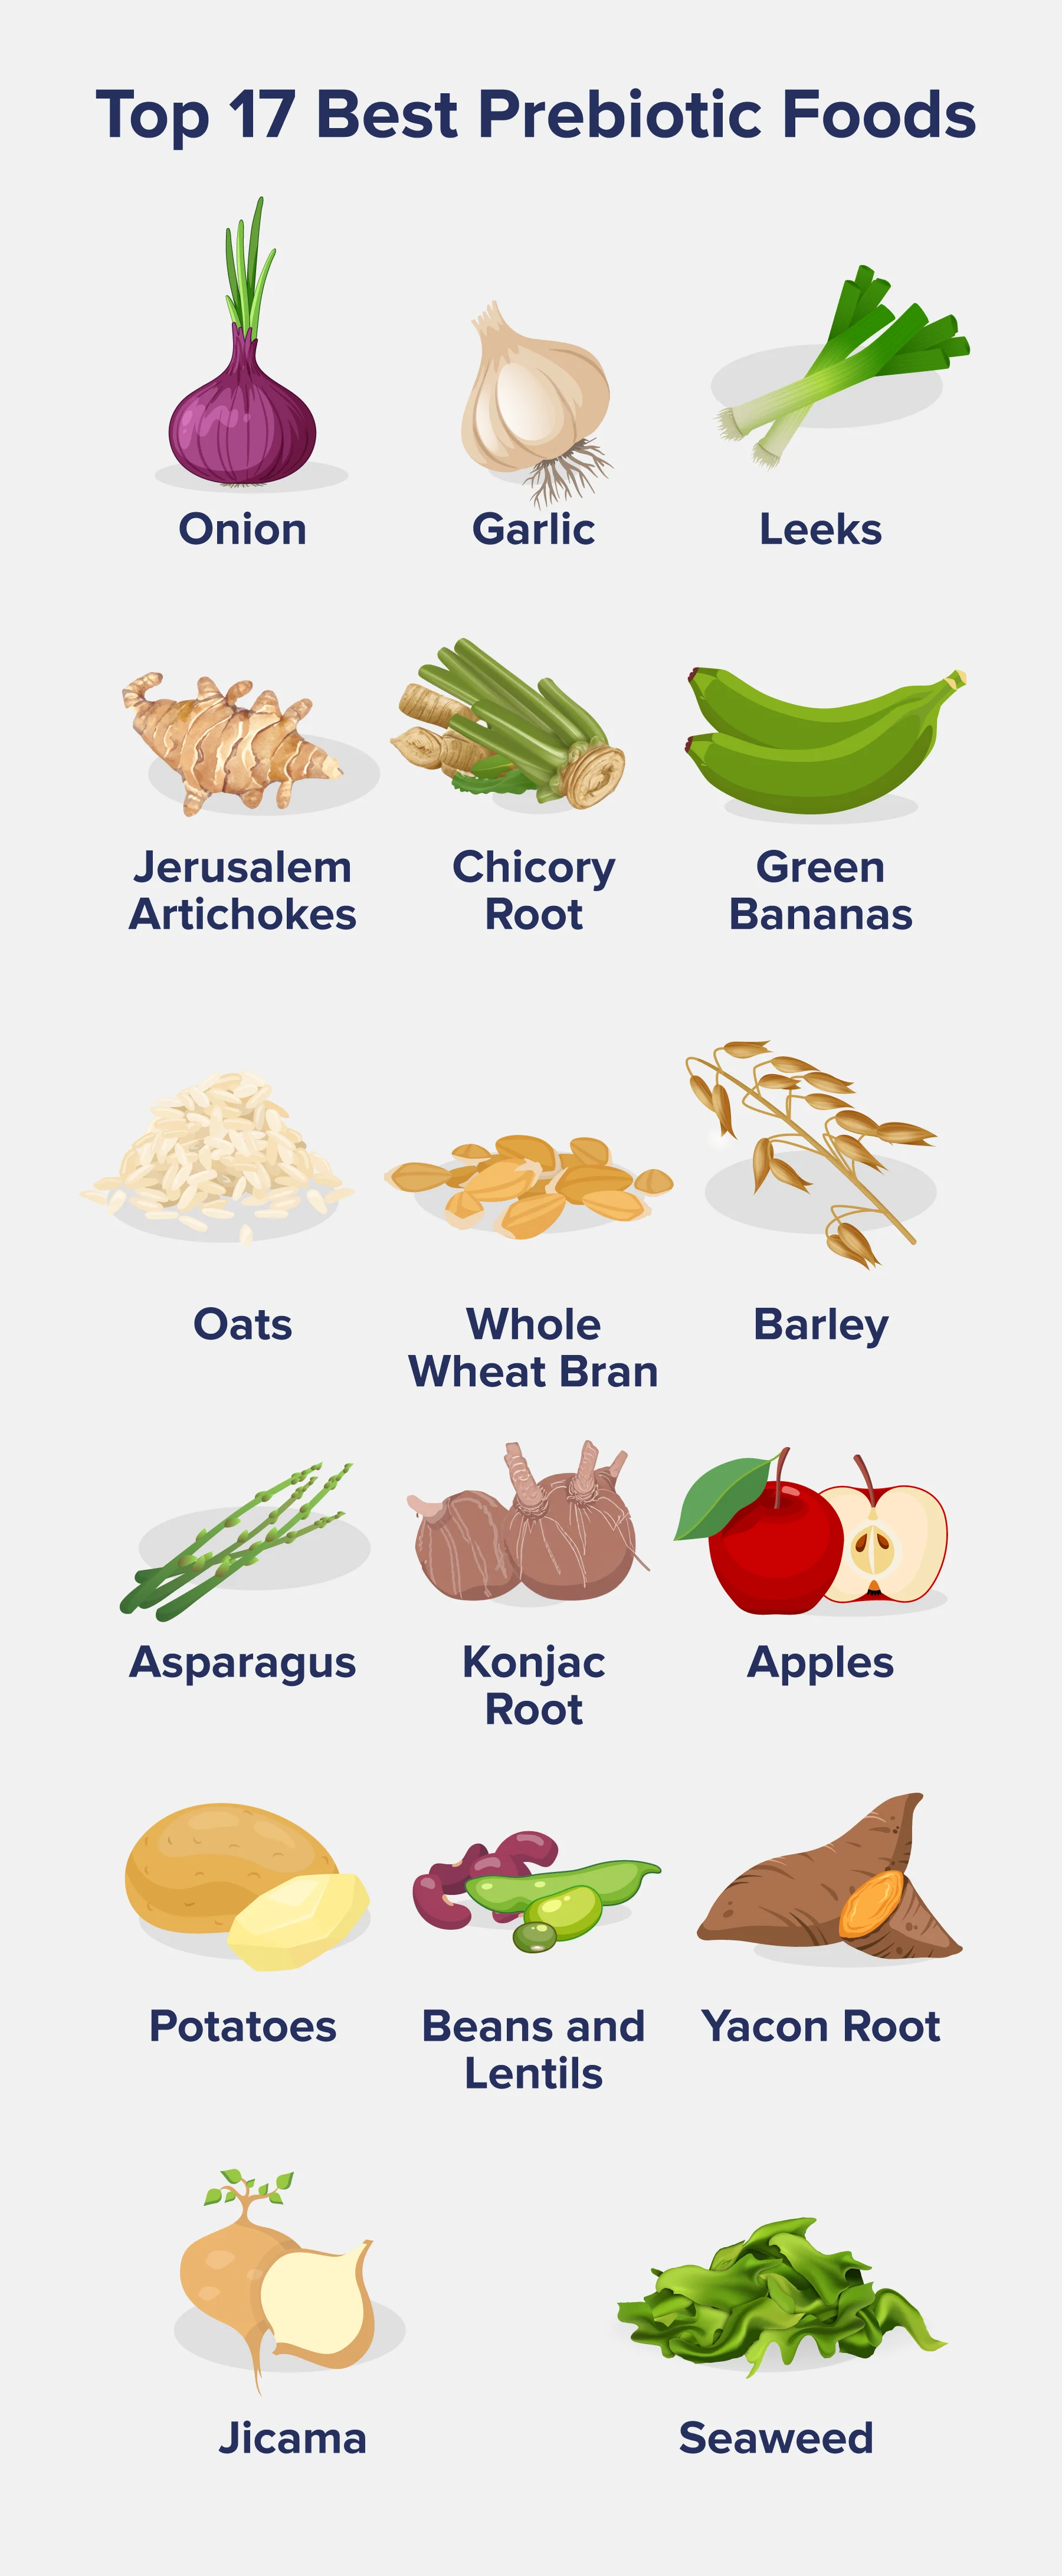 Top 17 Best Prebiotic Foods- Onion- Garlic- Leeks- Jerusalem Artichokes- Chicory Root- Green Bananas- Oats- Whole Wheat Bran- Barley- Asparagus- Konjac Root- Apples- Potatoes- Beans and Lentils- Yacon Root- Jicama- Seaweed